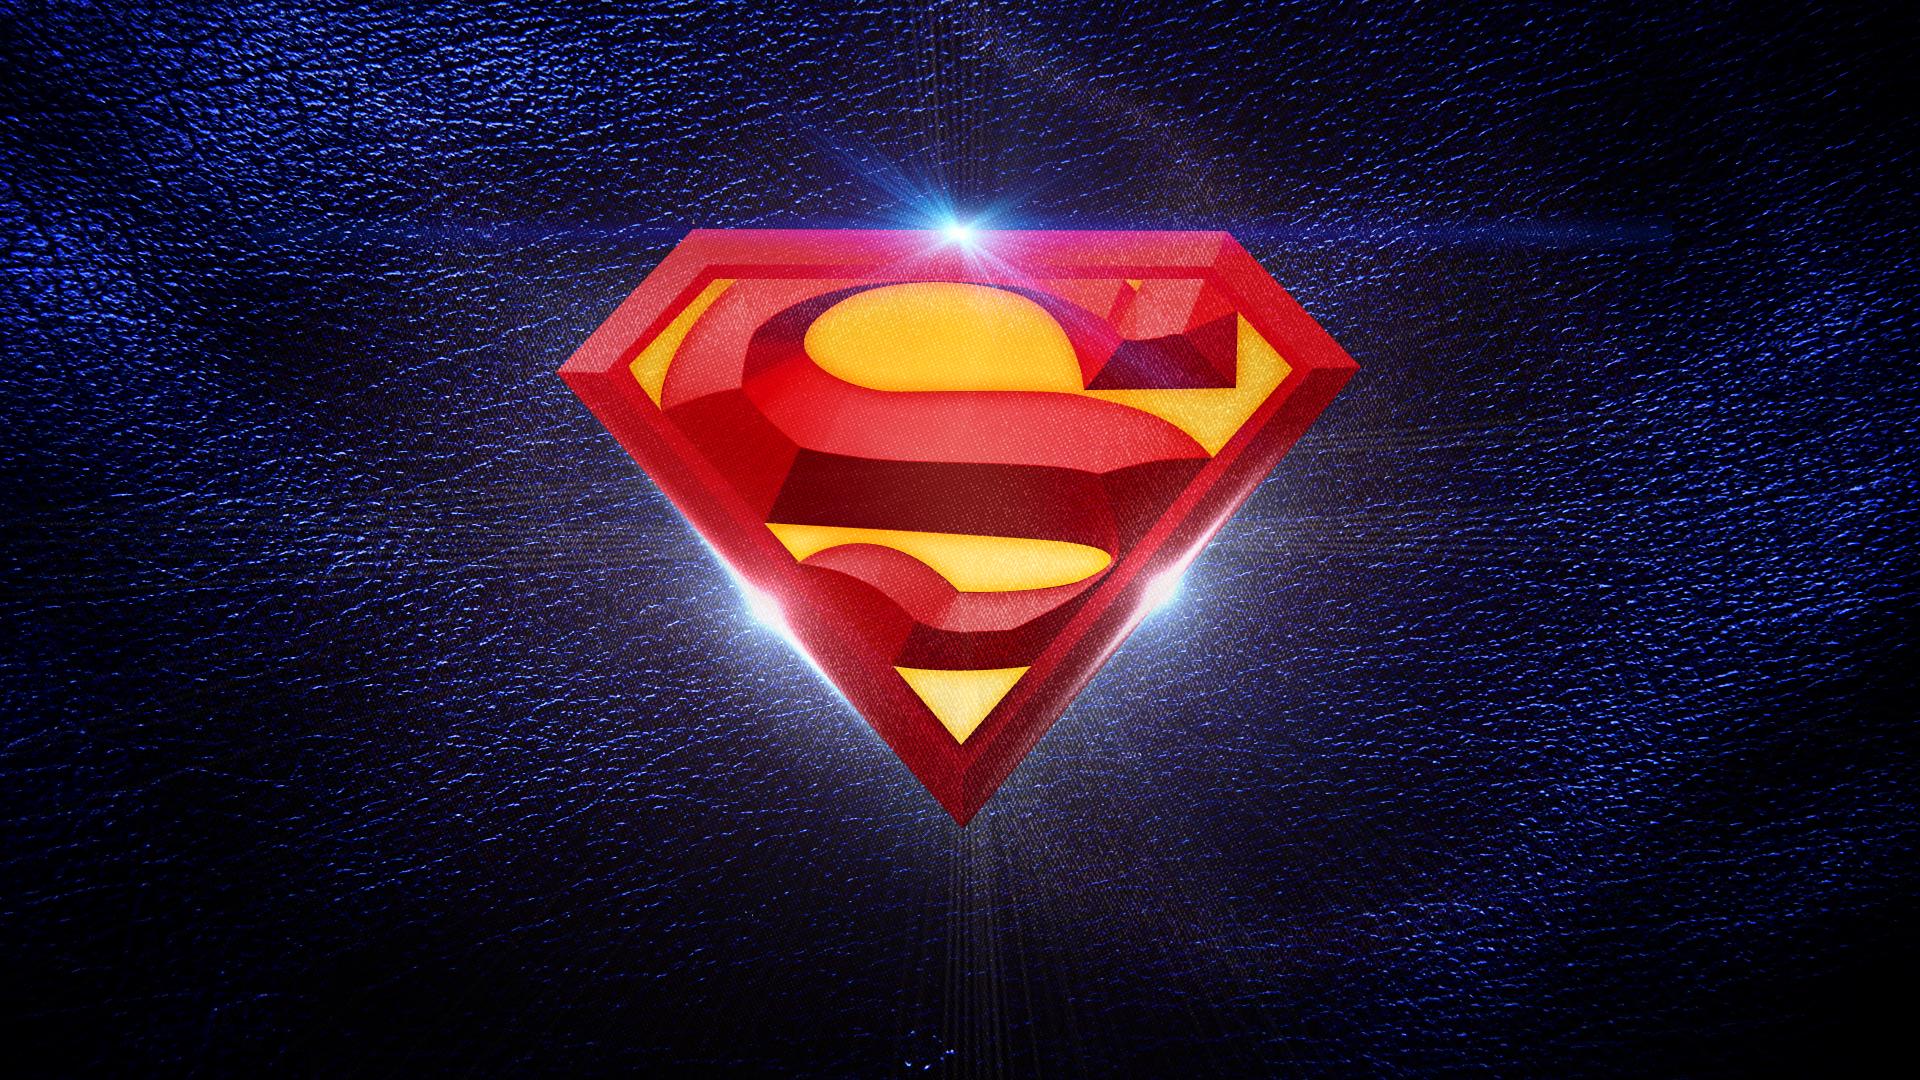 Superman #683389 | Full HD Widescreen wallpapers for desktop download